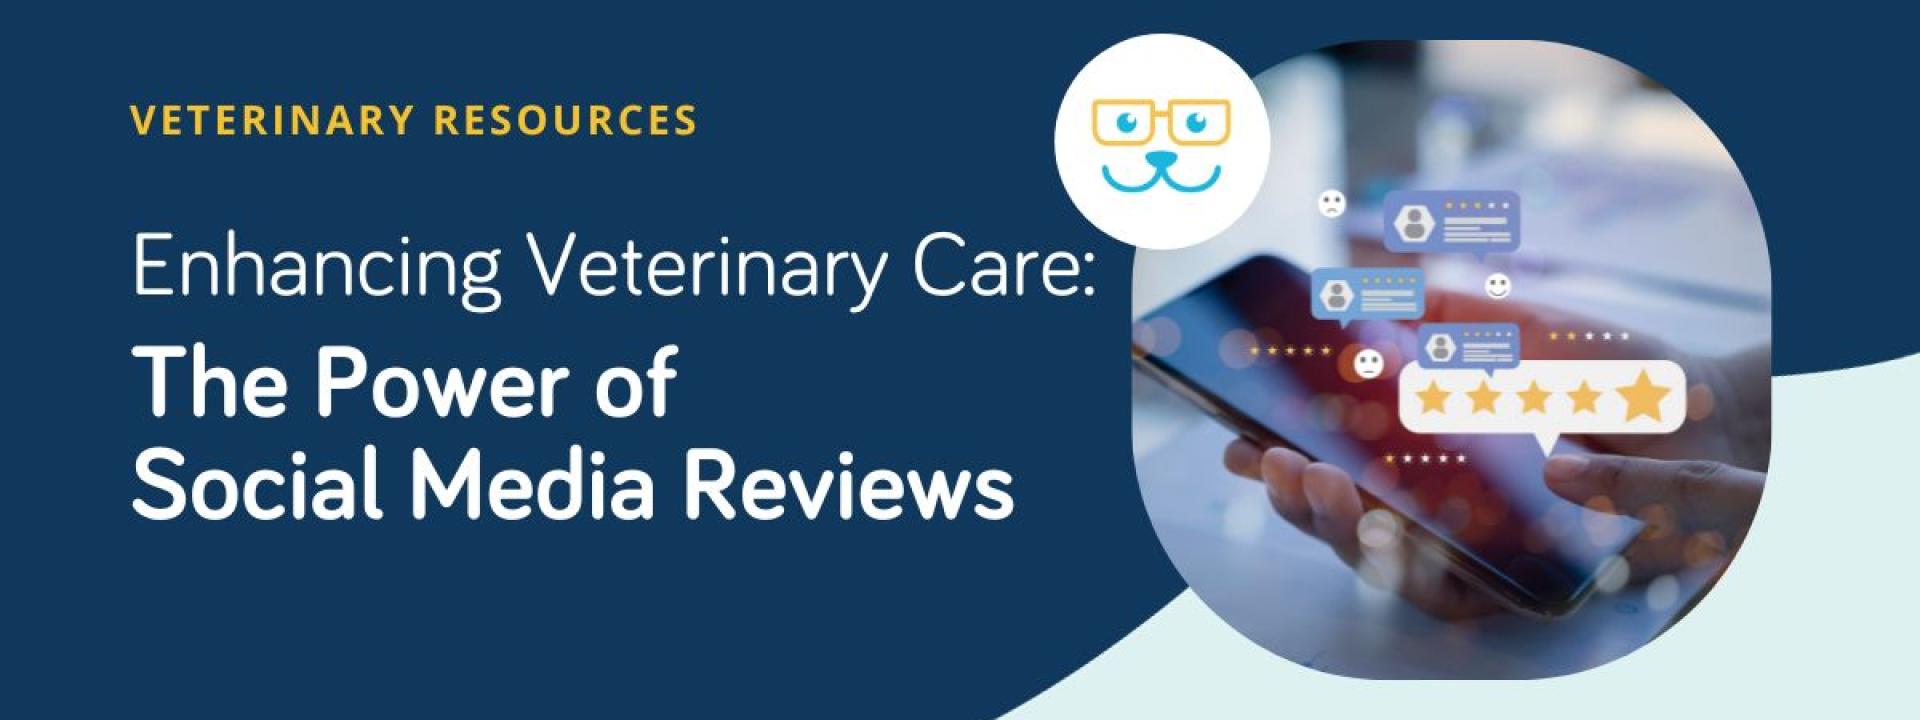 Enhancing Veterinary Care: The Power of Social Media Reviews